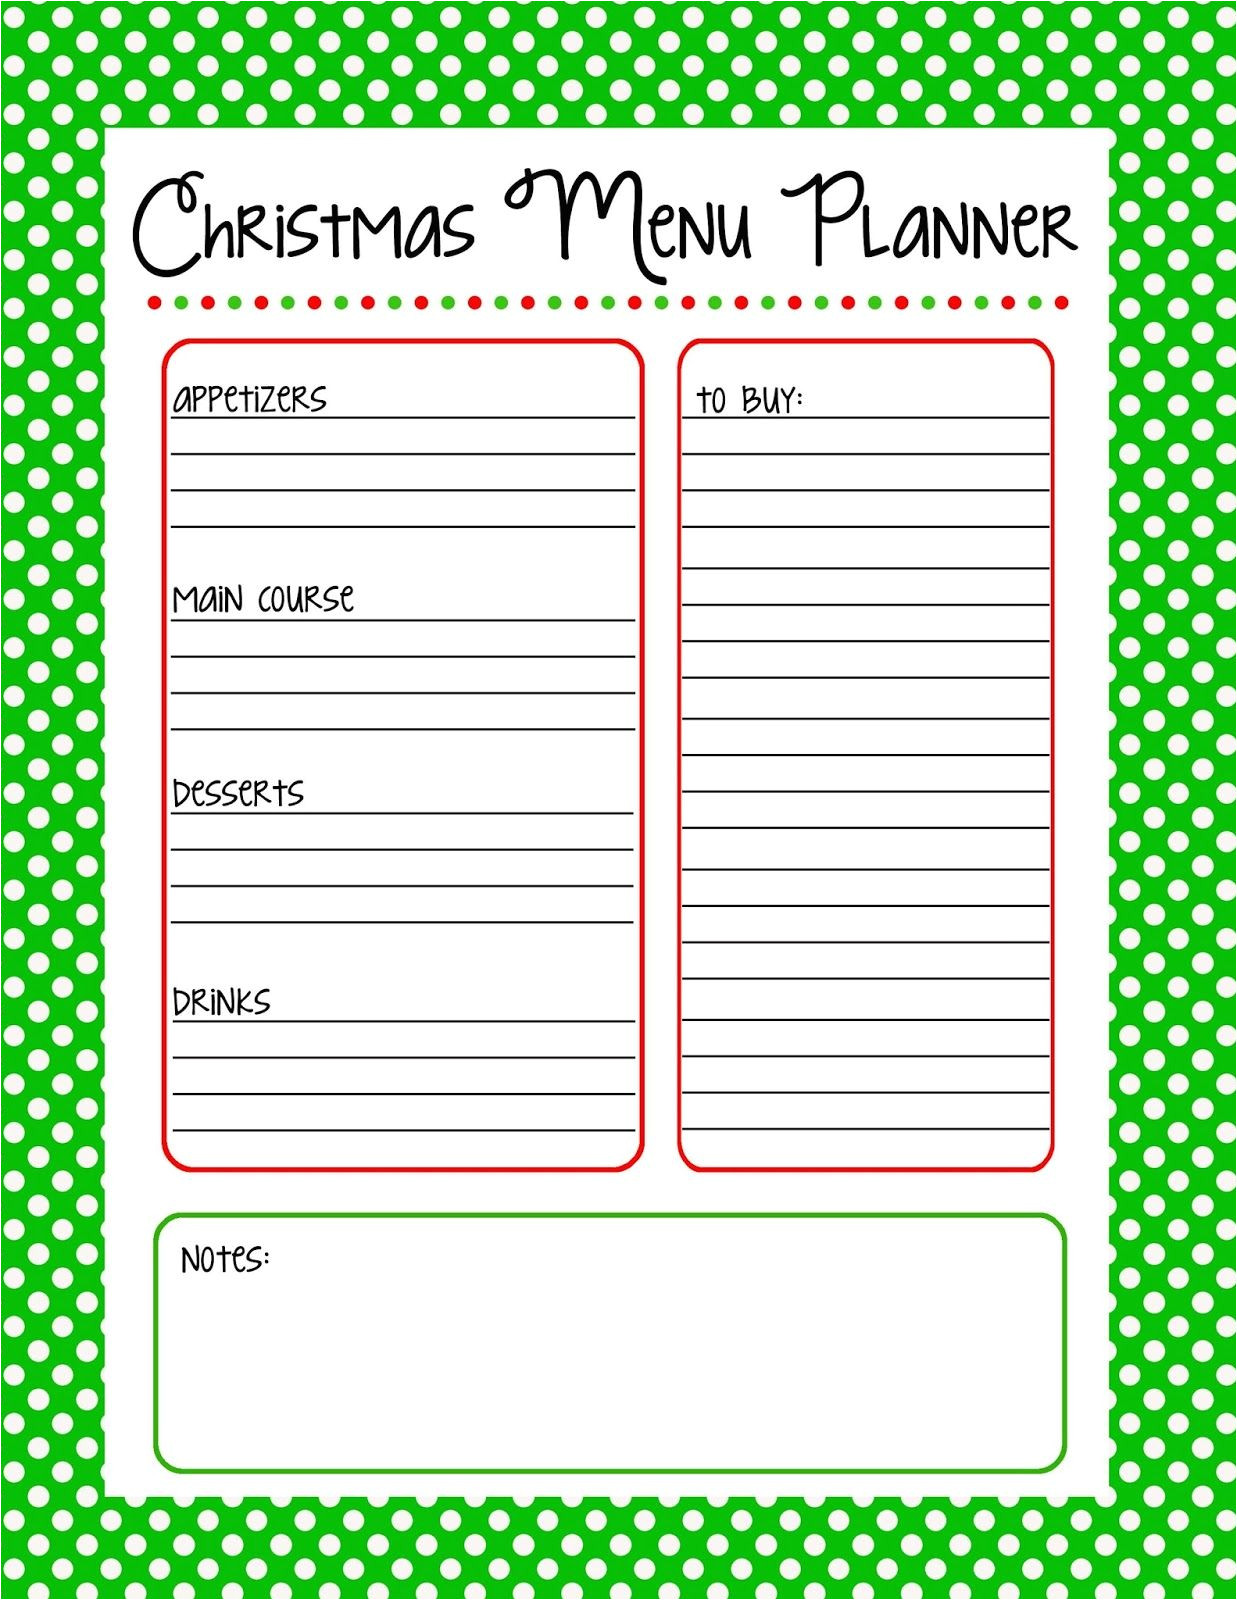 Christmas Recipe Card Template Free Editable Christmas Menu Planner Free Printable 25 Days to An